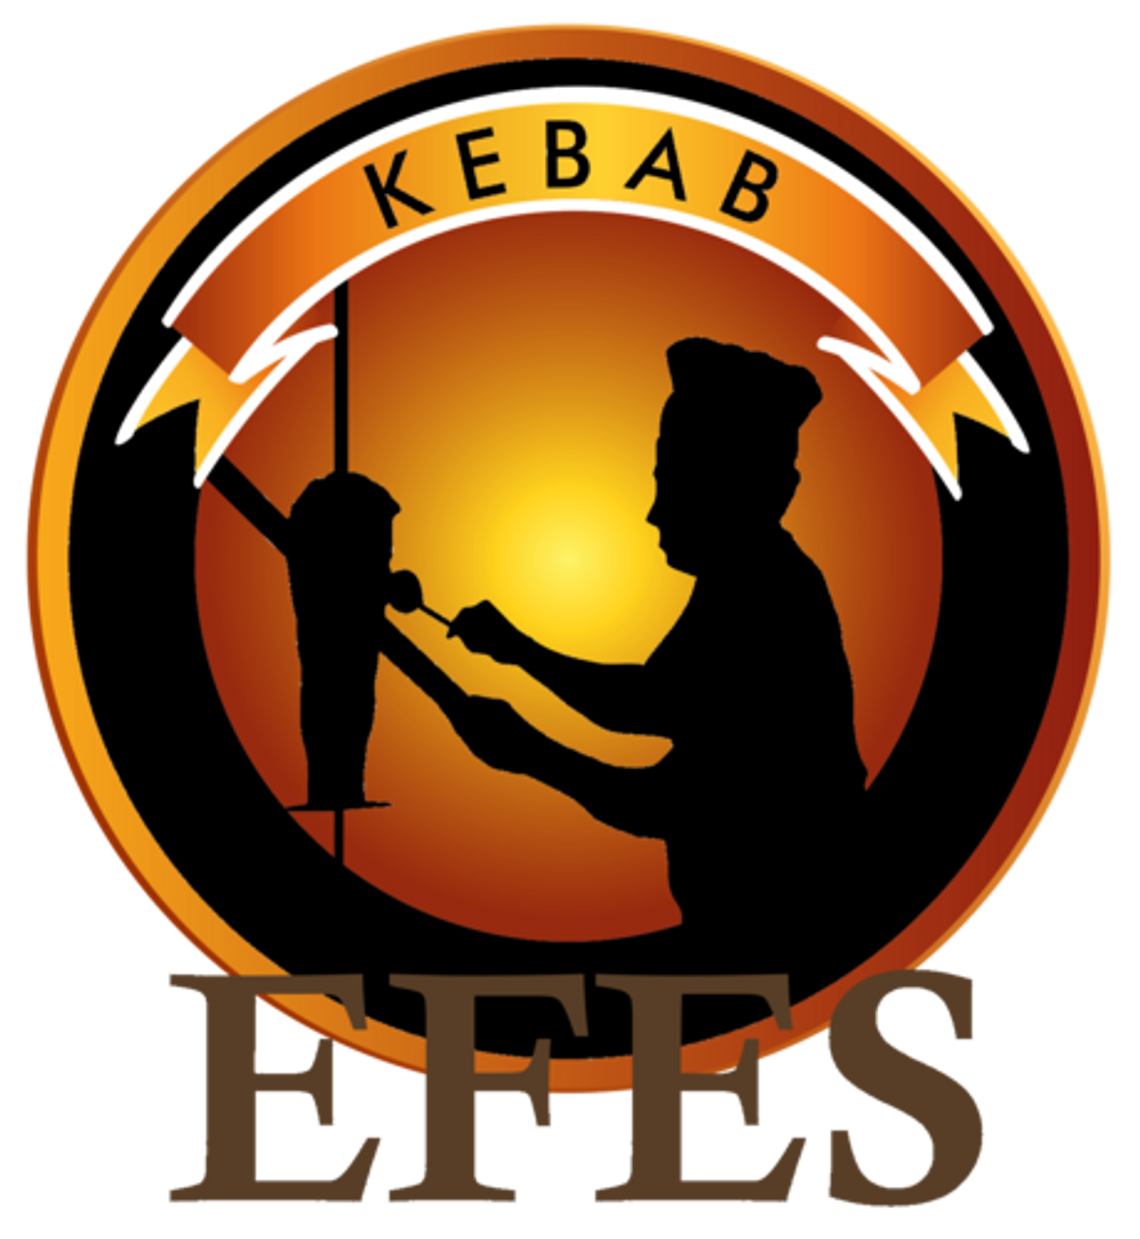 Efes Kebab Tarnów